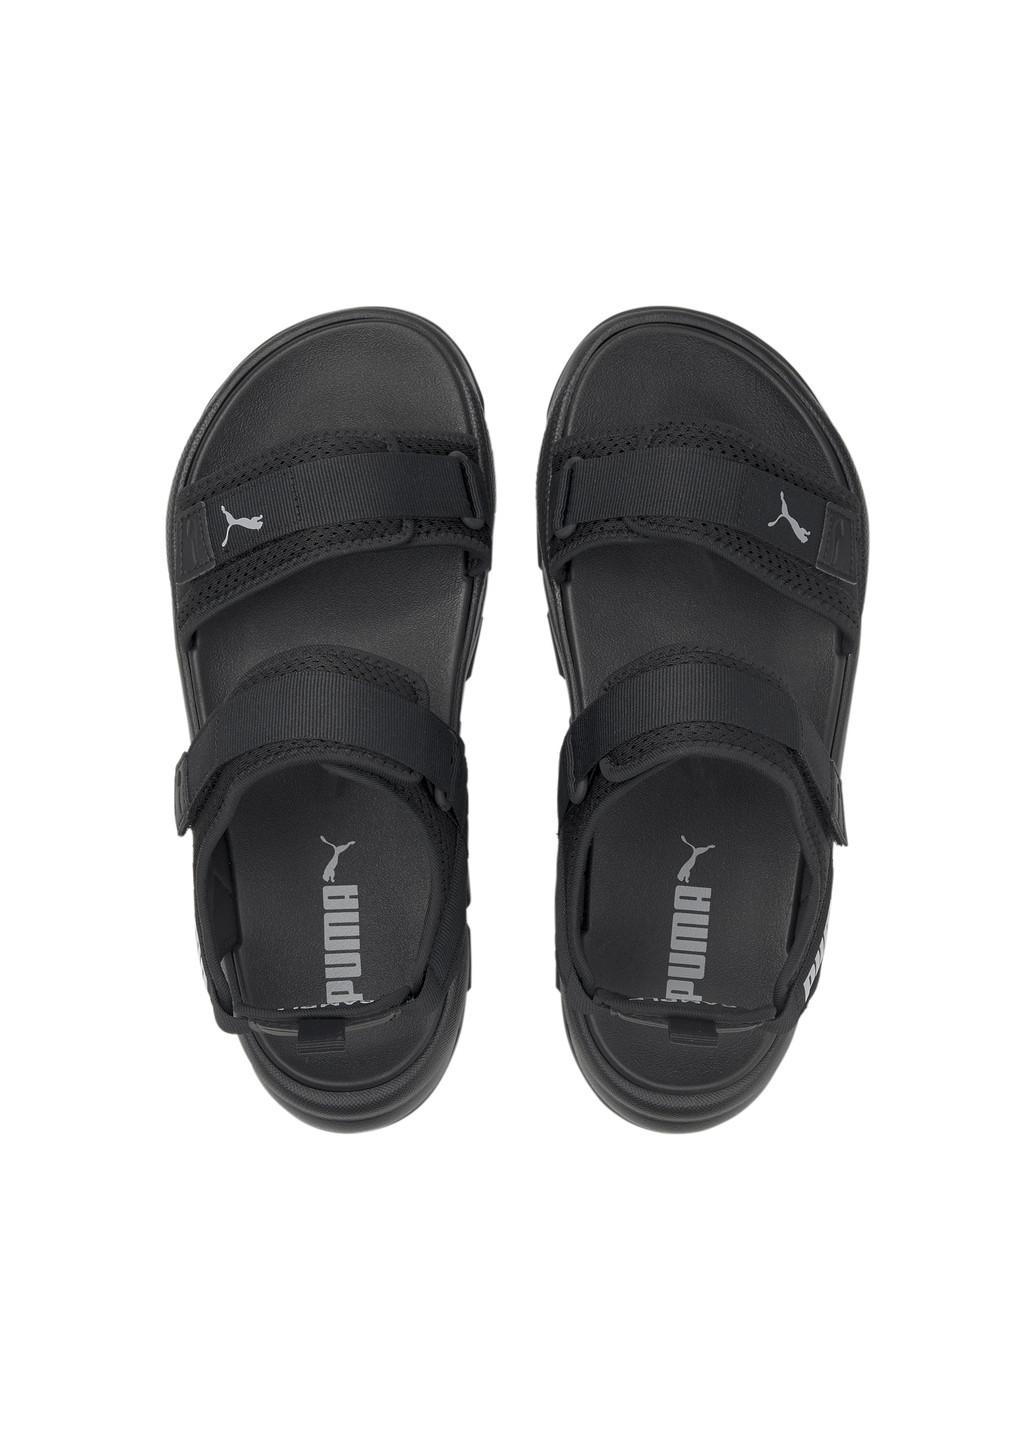 Сандалі RS Sandals Puma однотонна чорна спортивна